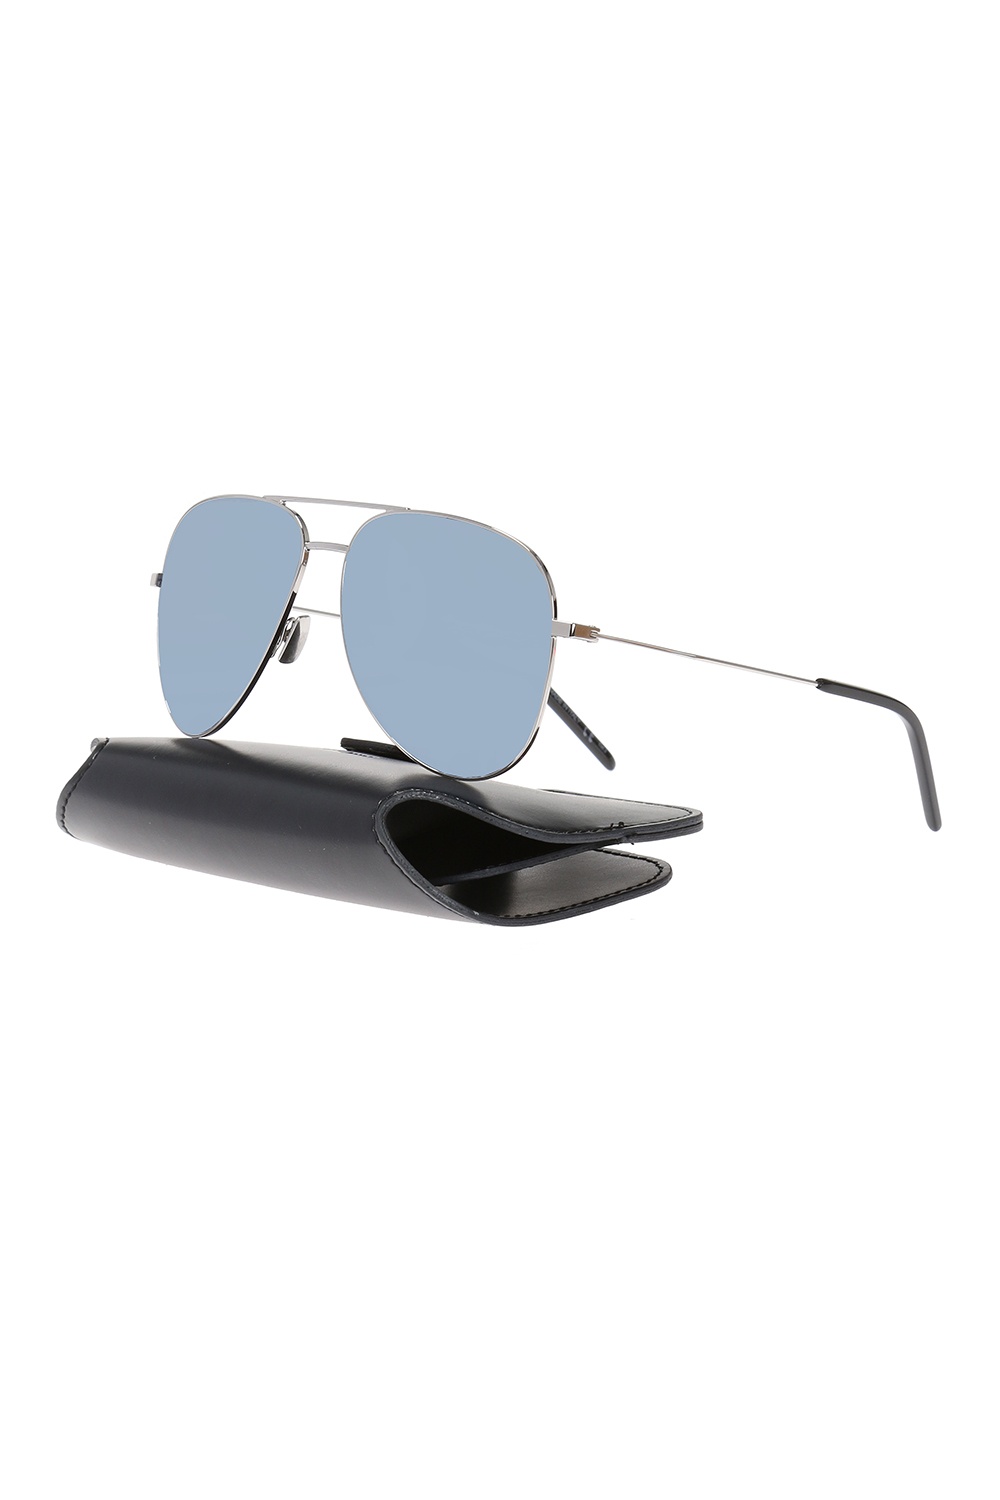 Saint Laurent ‘Classic 11’ sunglasses